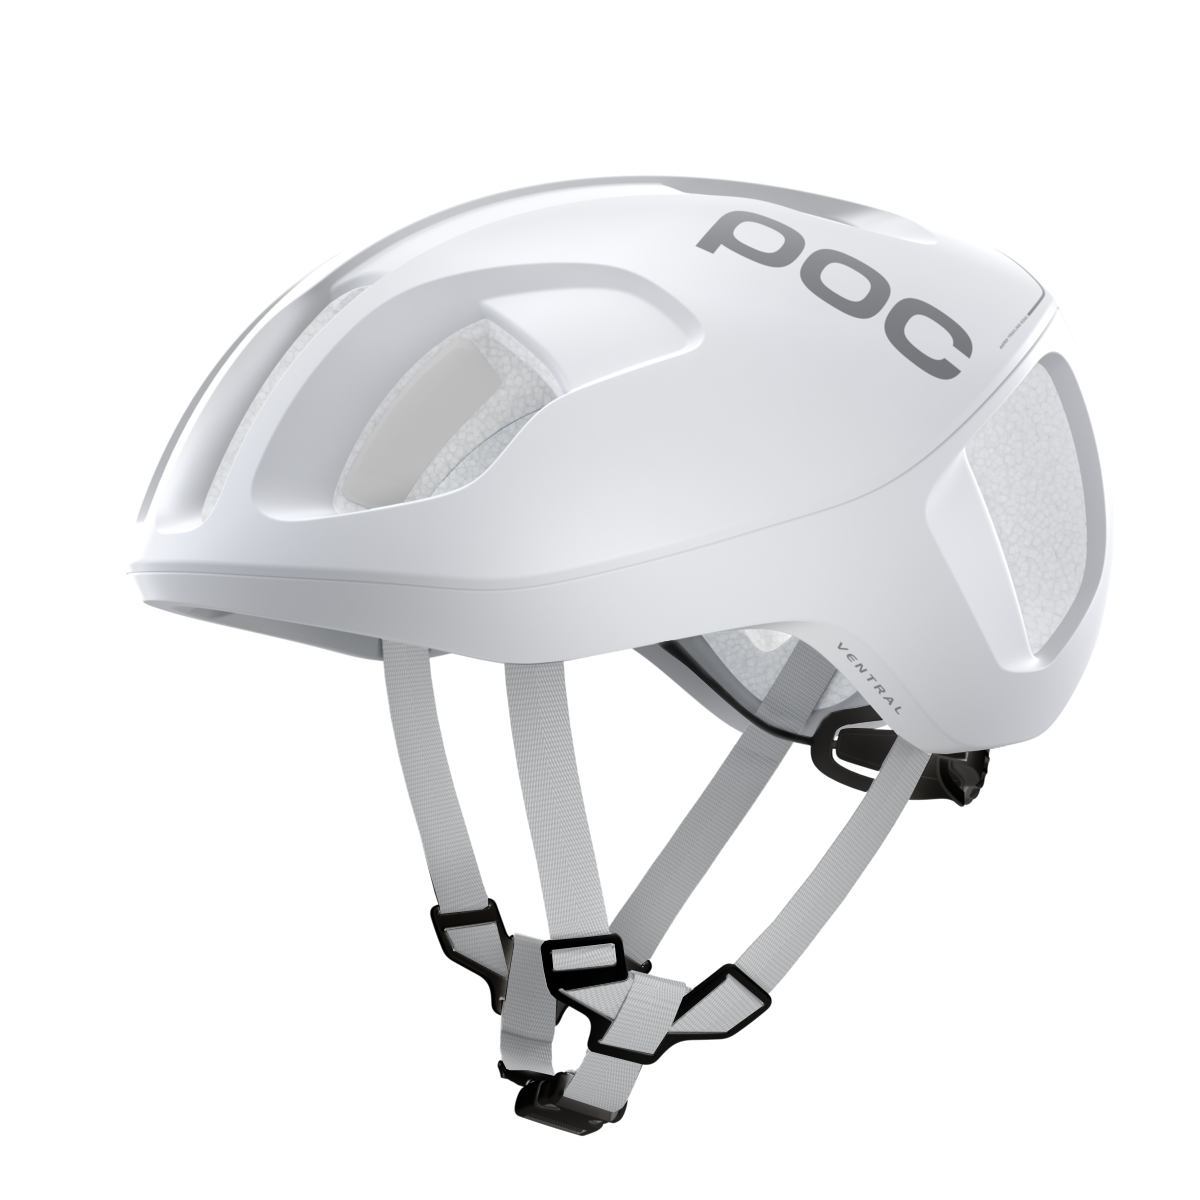 POC Ventral SPIN Helmet, 2021 - Cycle Closet